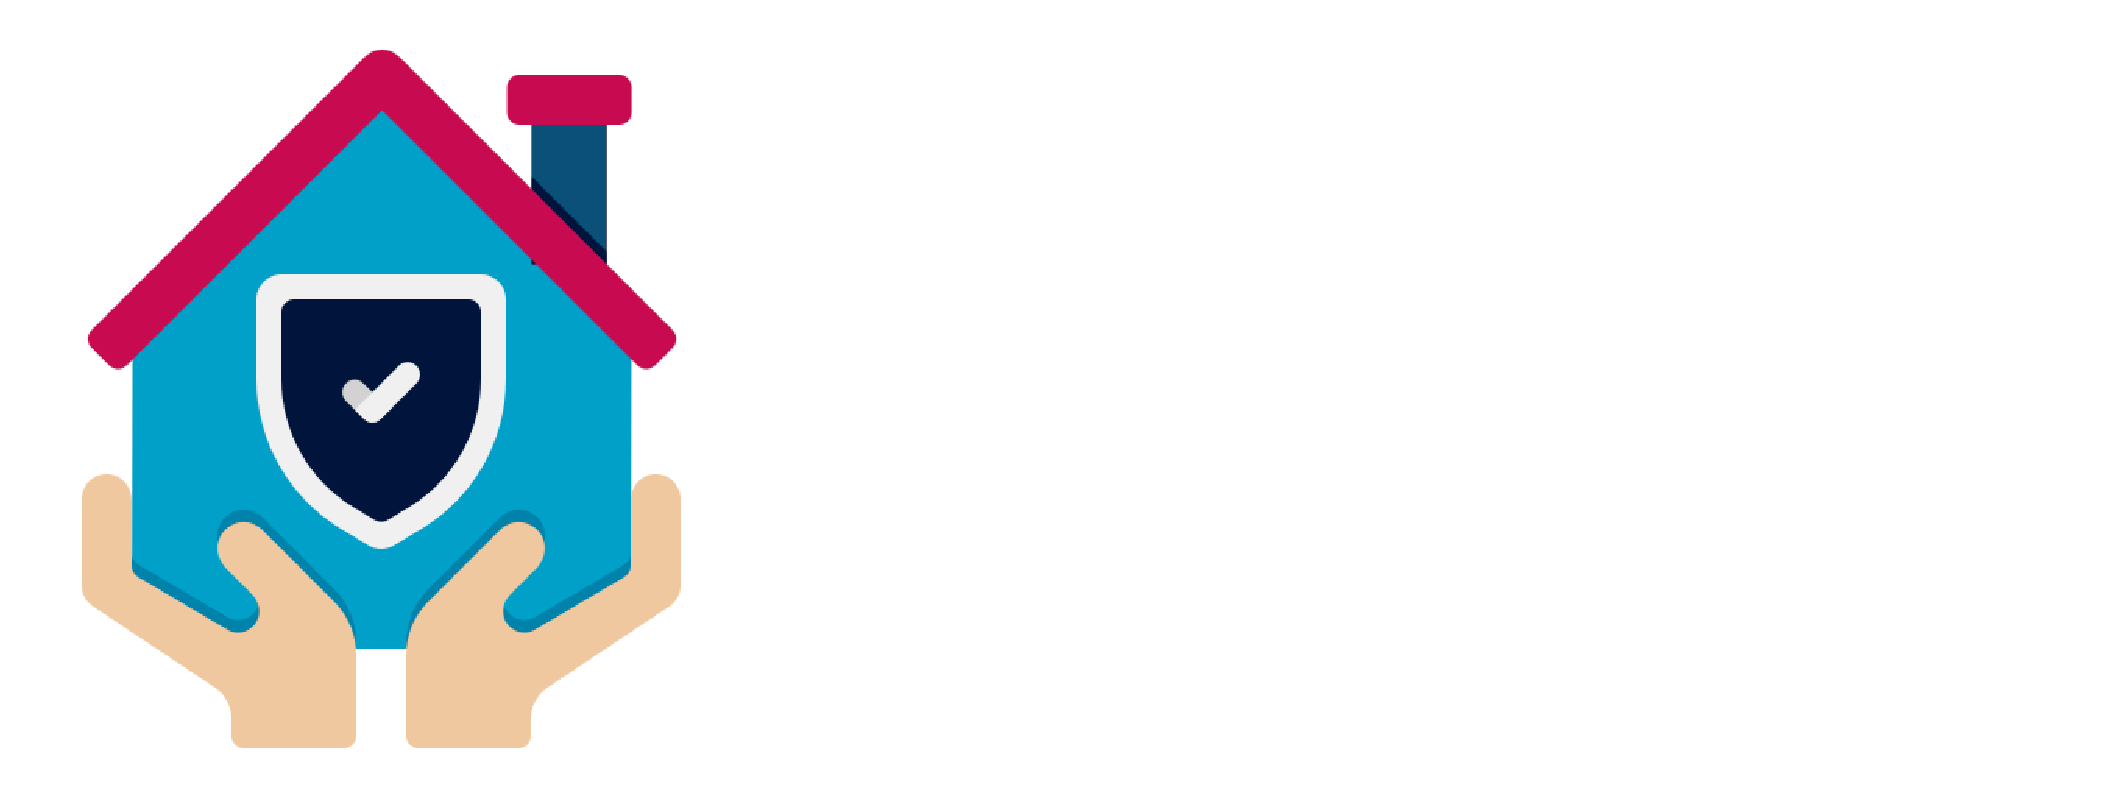 Mortgage Advisor 365